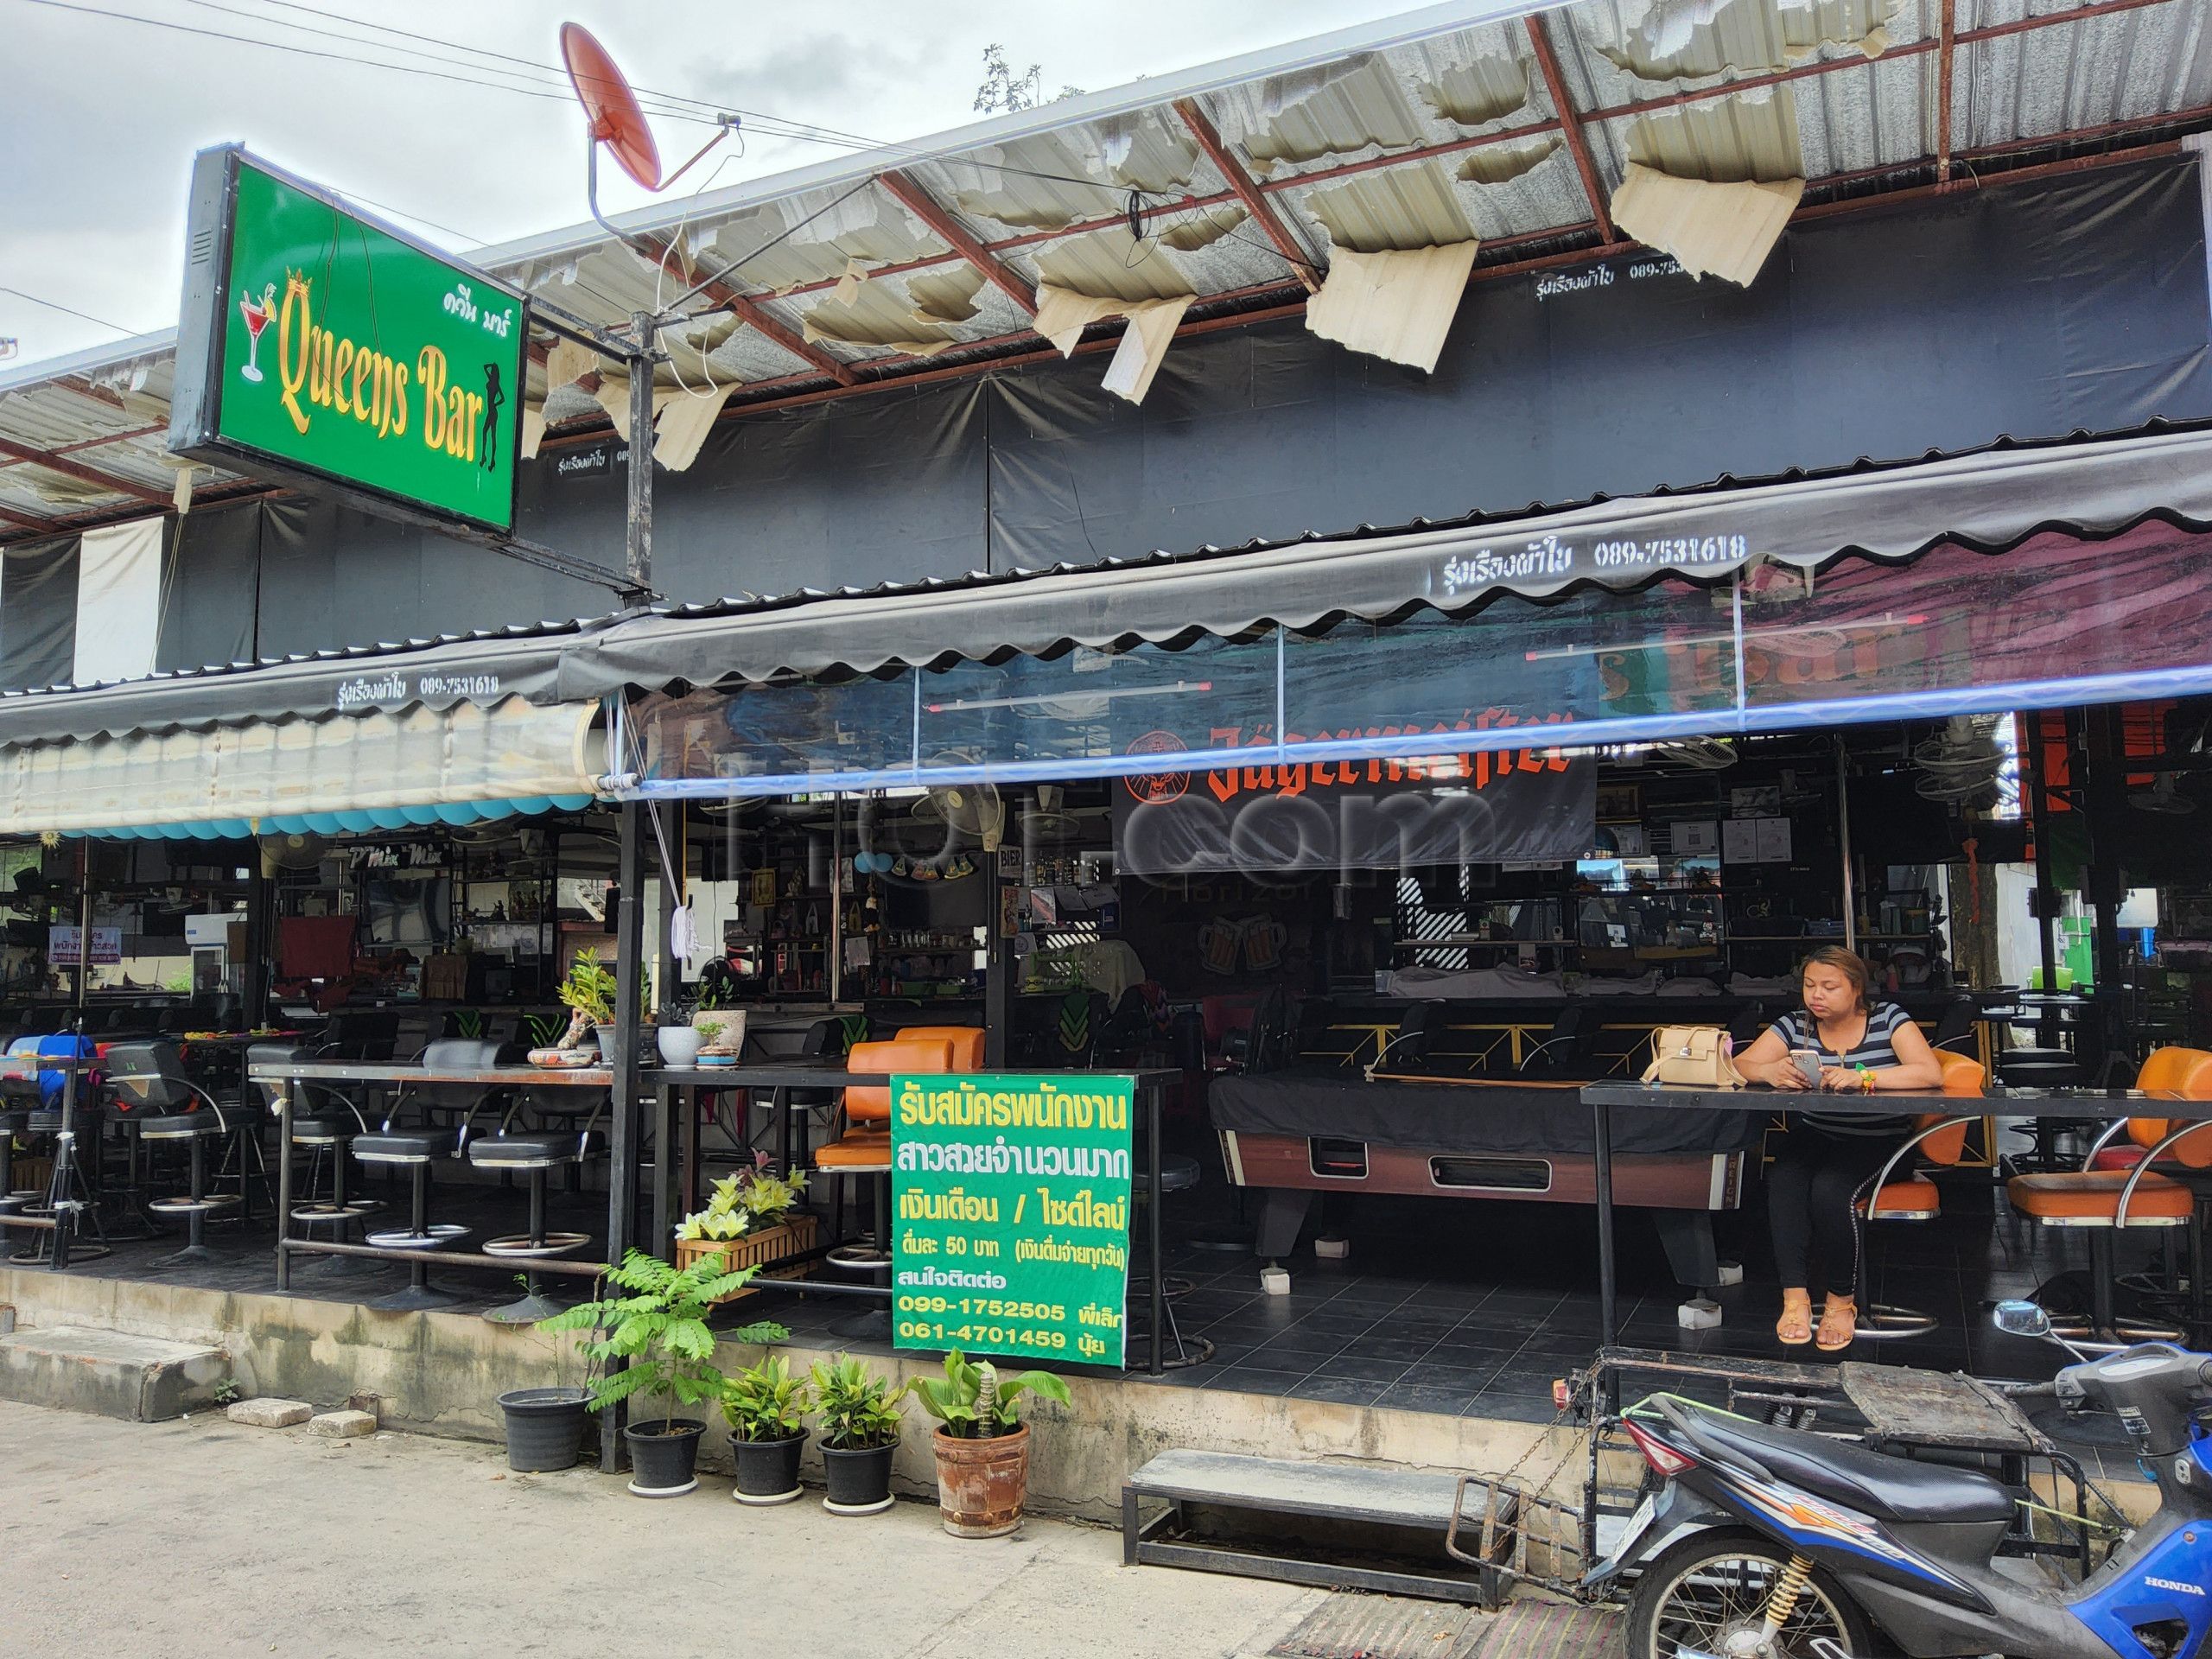 Pattaya, Thailand Queens Bar